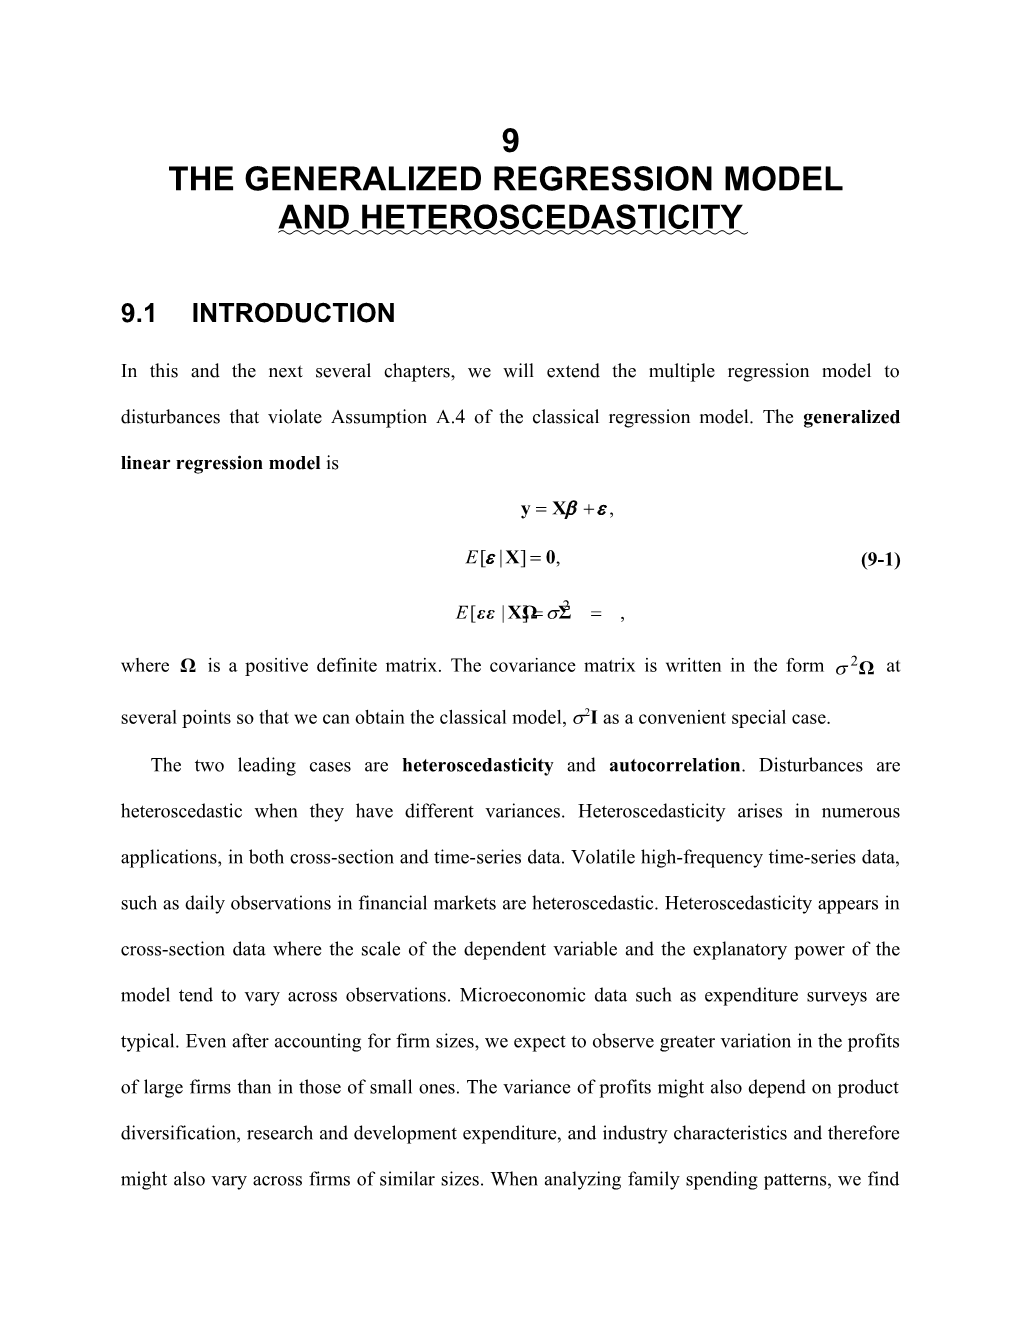 The Generalized Regression Model and Heteroscedasticity